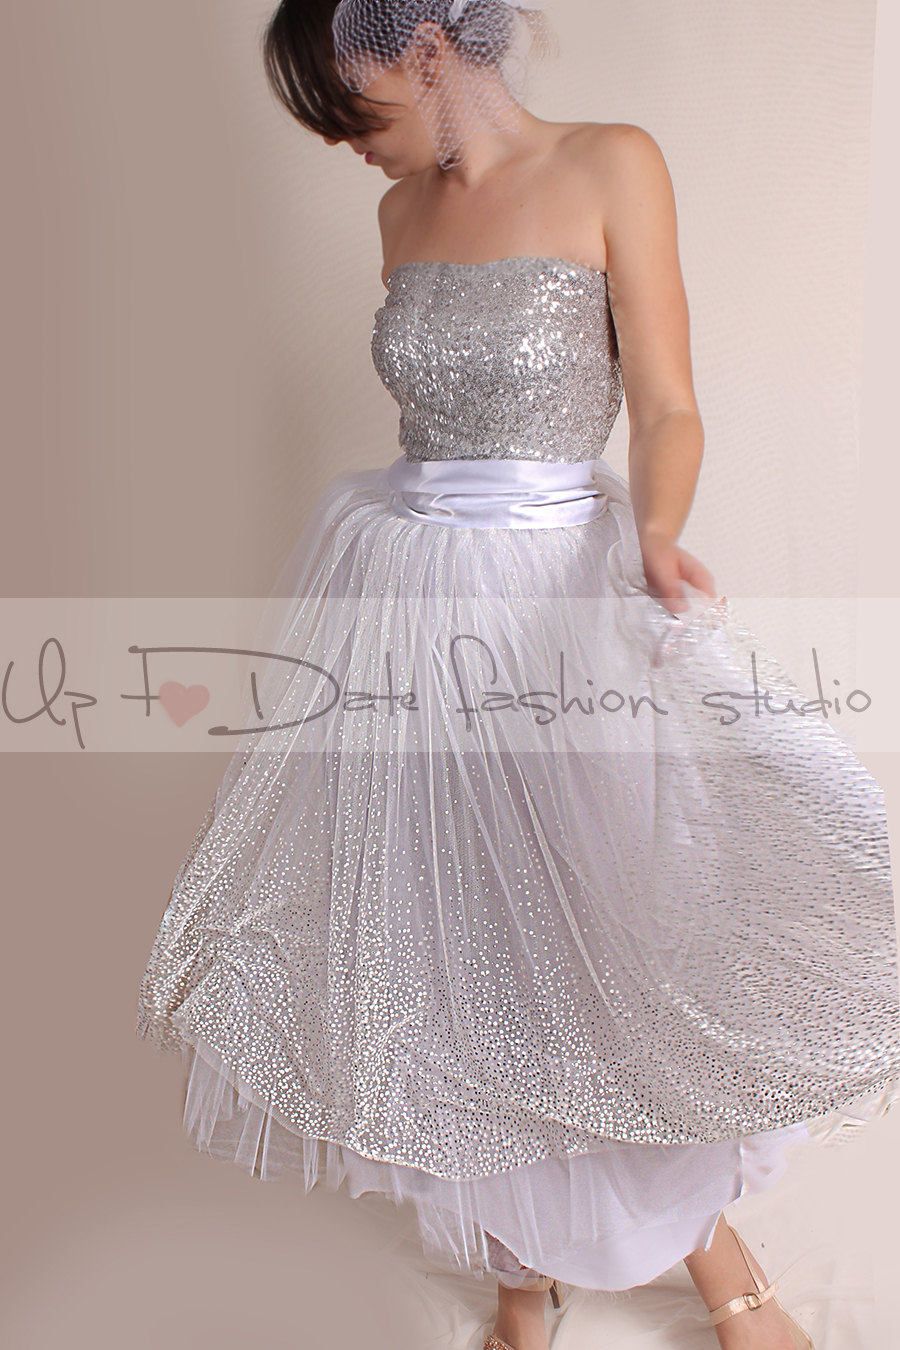 Vintage Inspired / Wedding Dress/ 50s Style/Tutu tulle tea length skirt with sequin Strapless